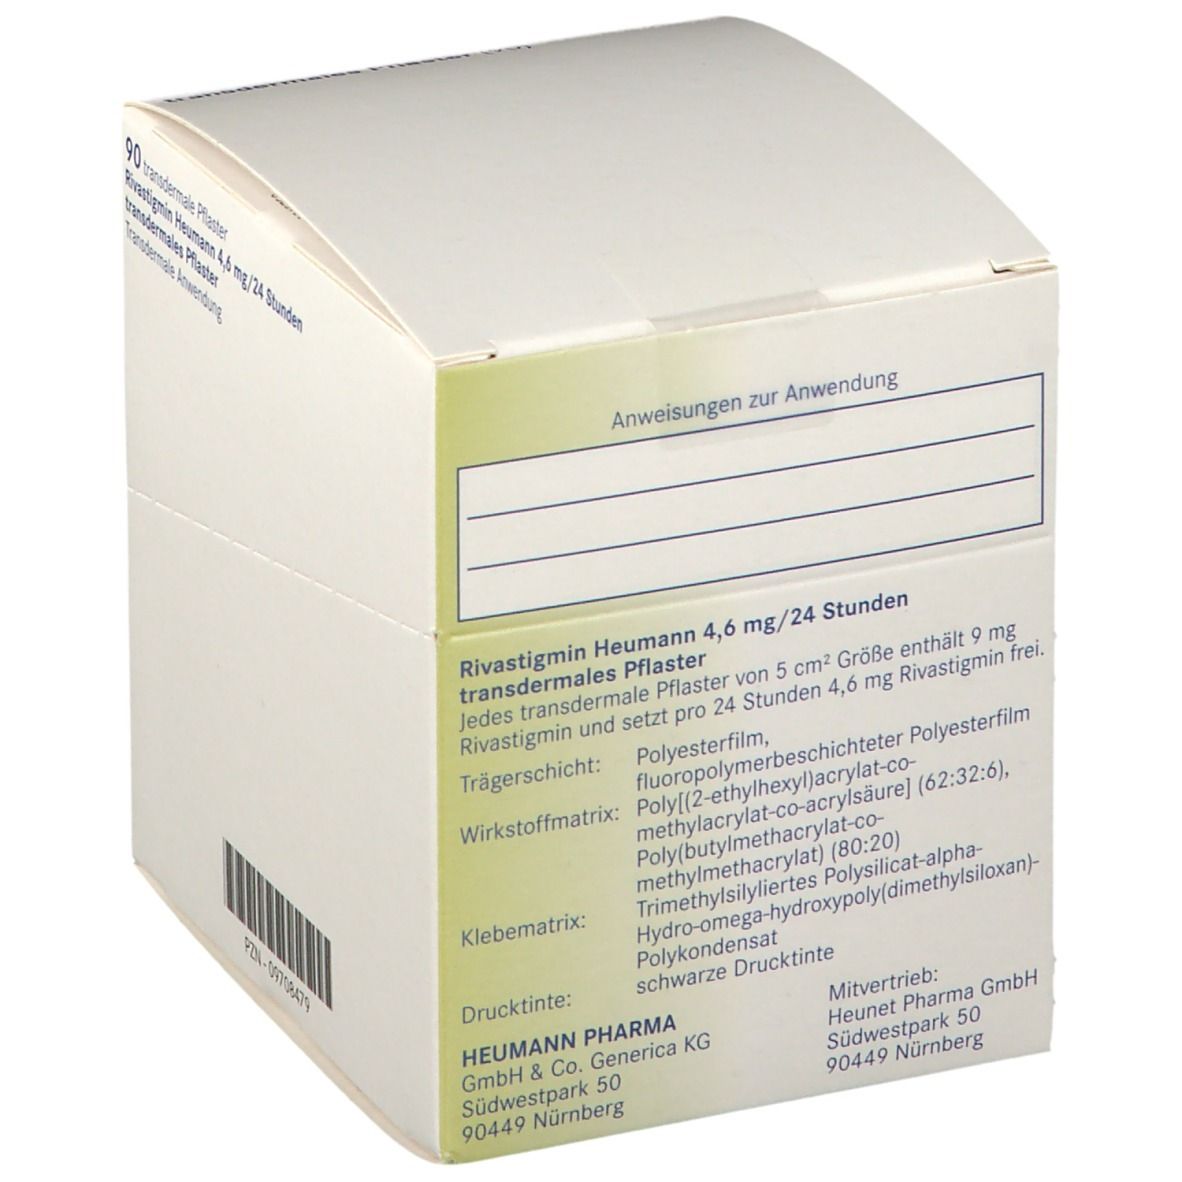 Rivastigmin Heumann 4,6 mg/24 Stunden